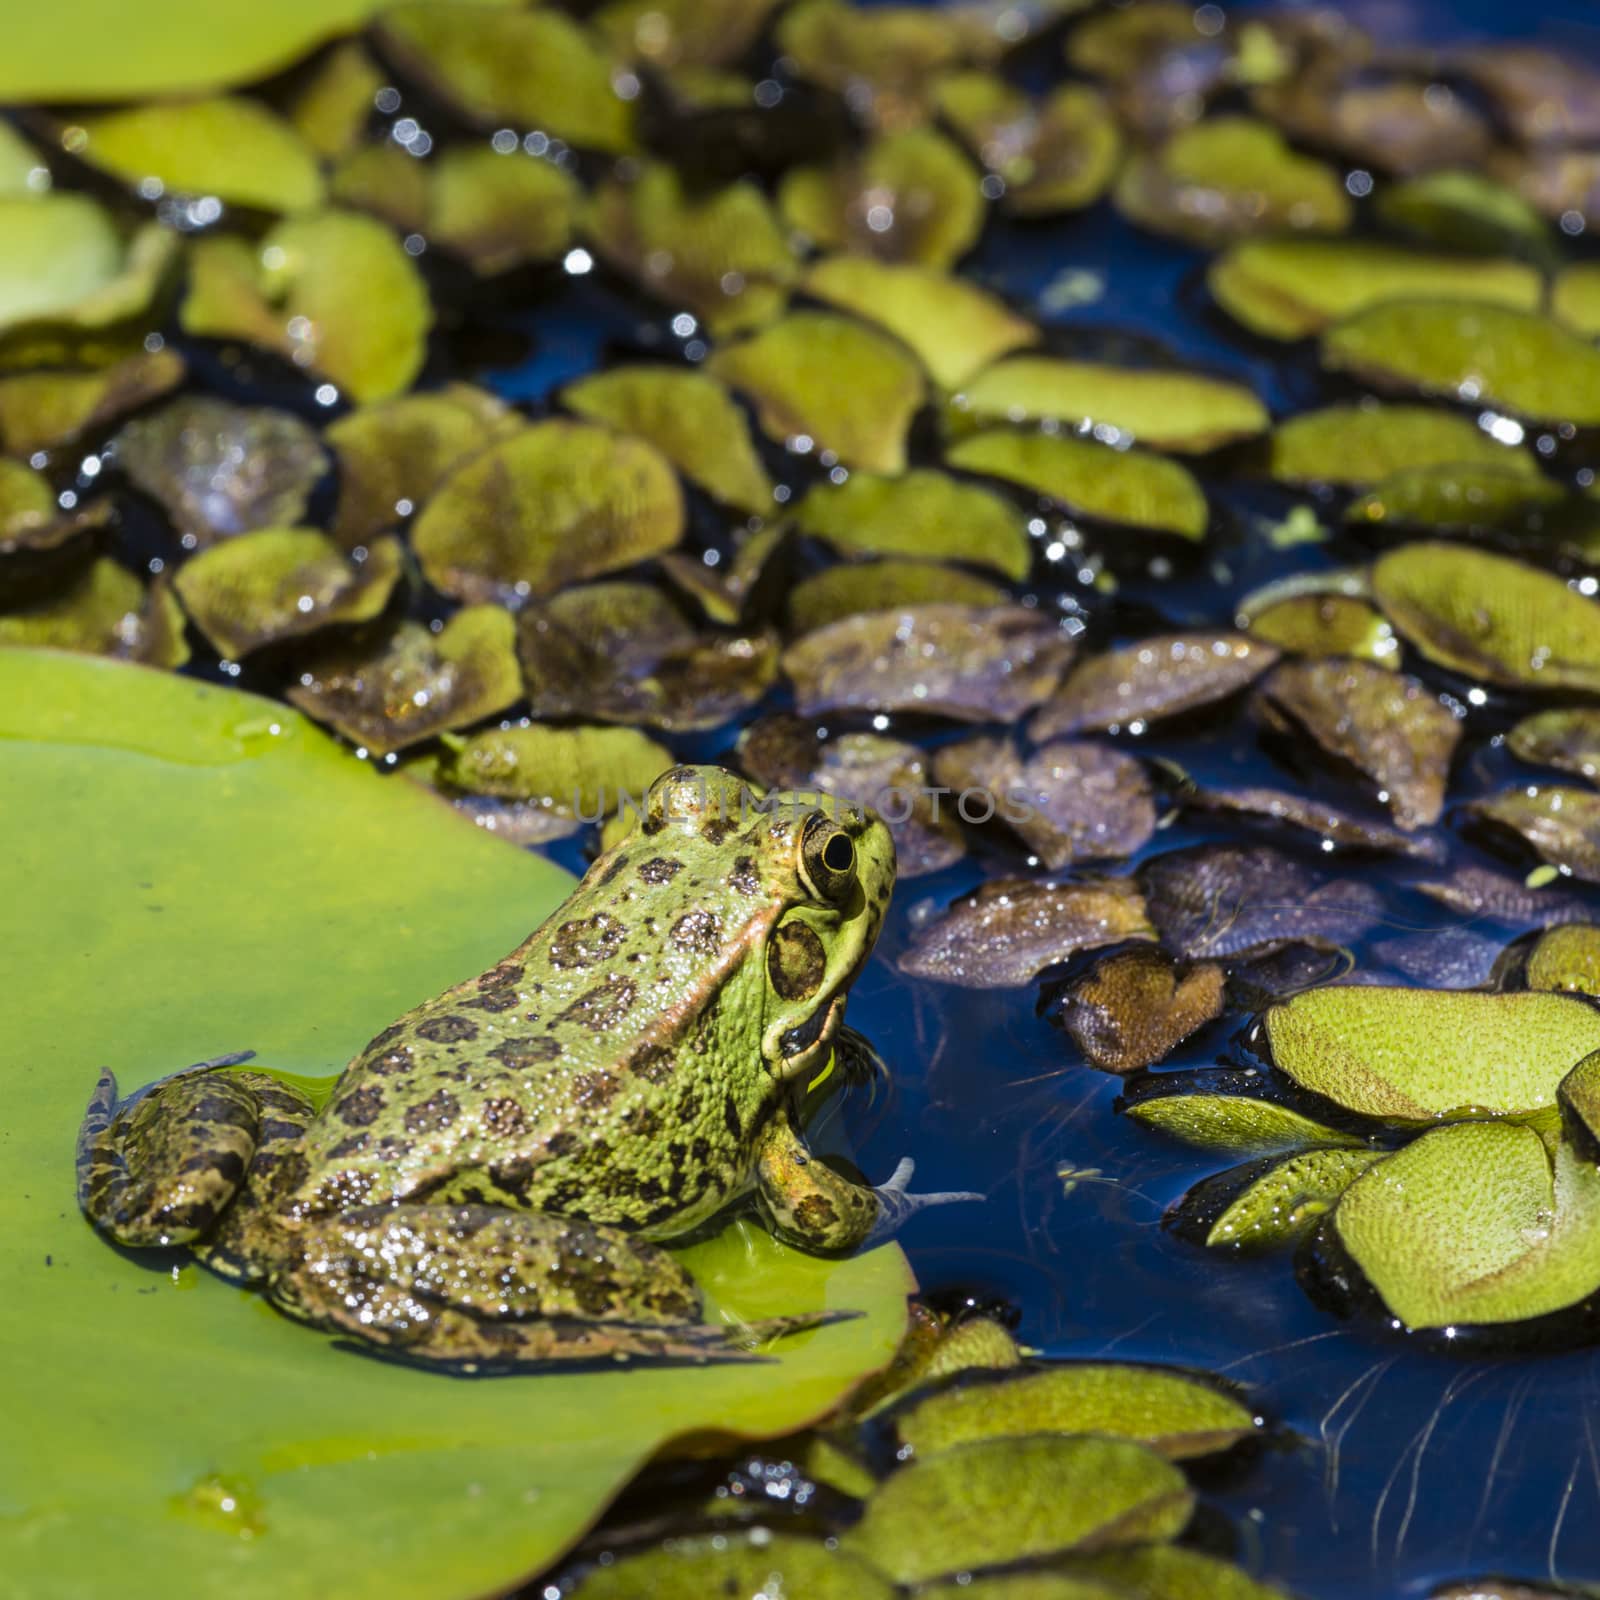 Green Frog in a wetland by mariusz_prusaczyk